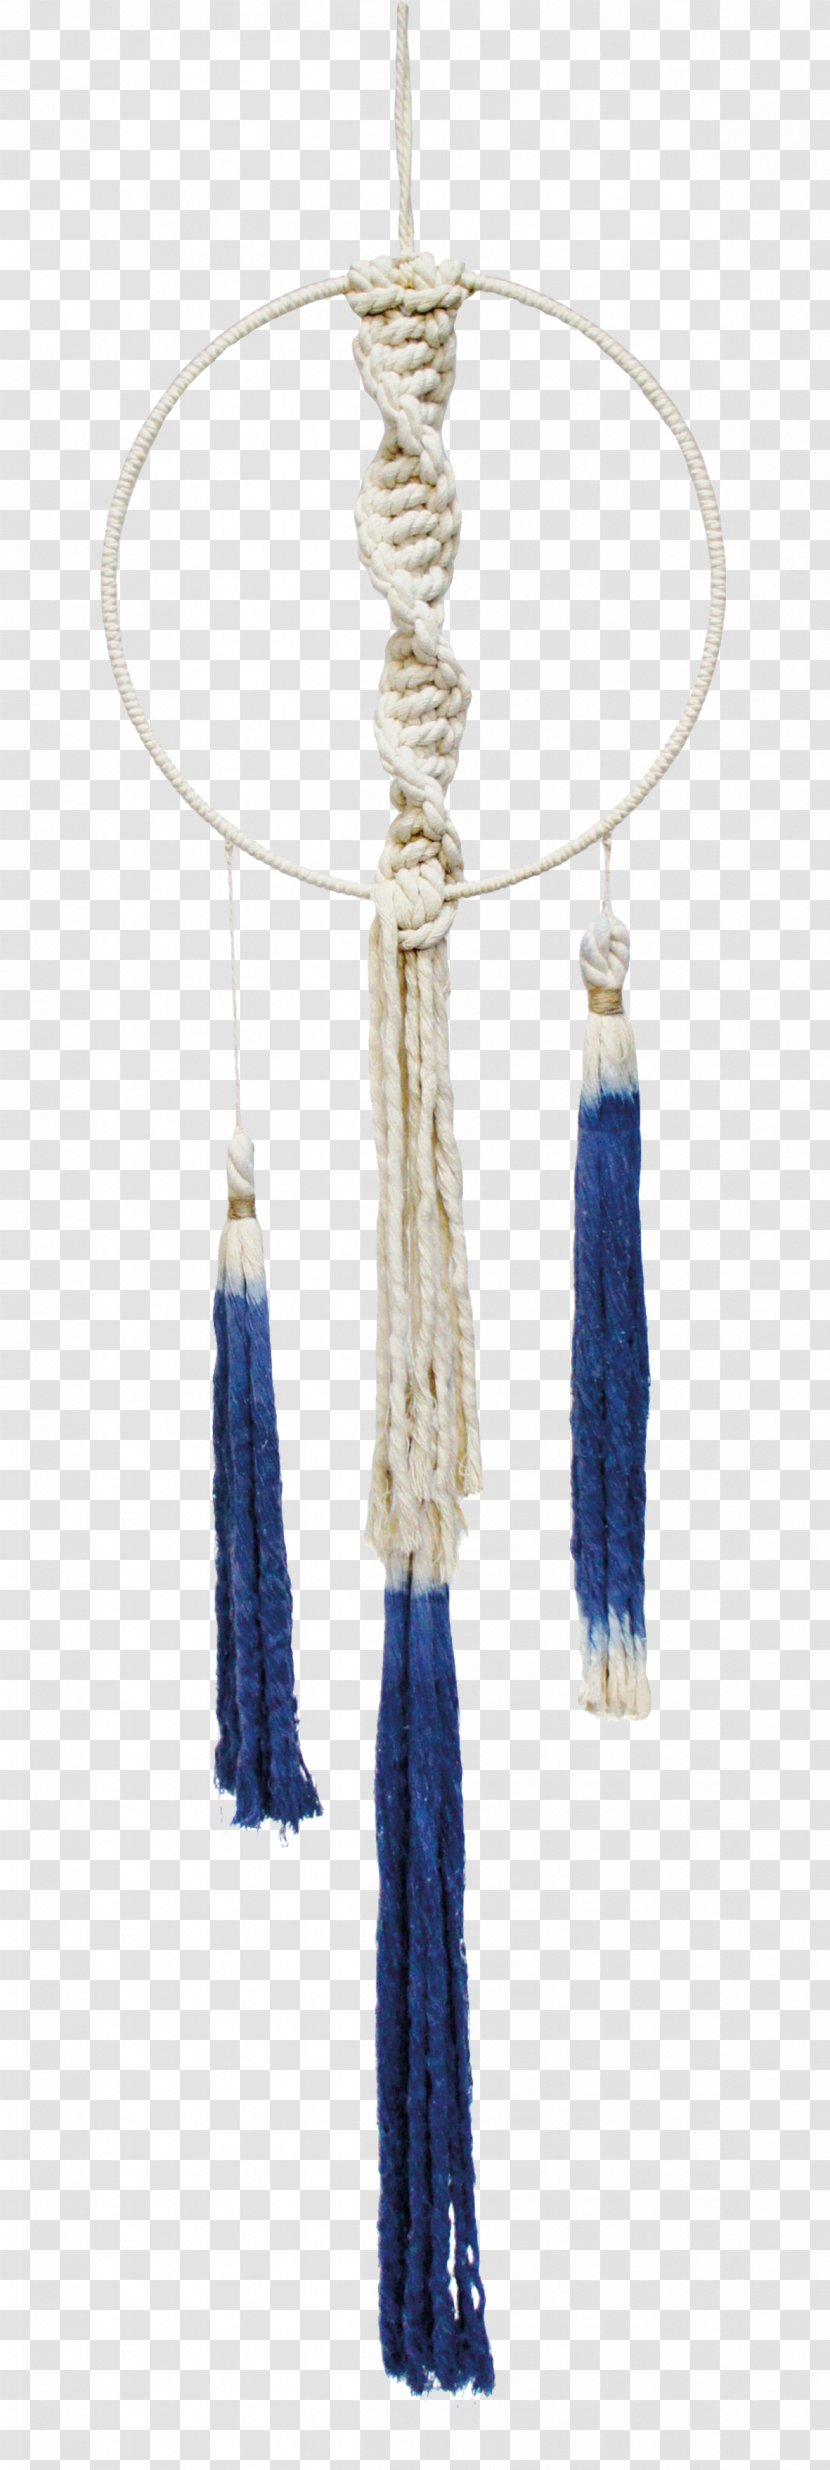 Jewellery Clothing Accessories Necklace Cobalt Blue Fashion - Dreamcatcher Transparent PNG